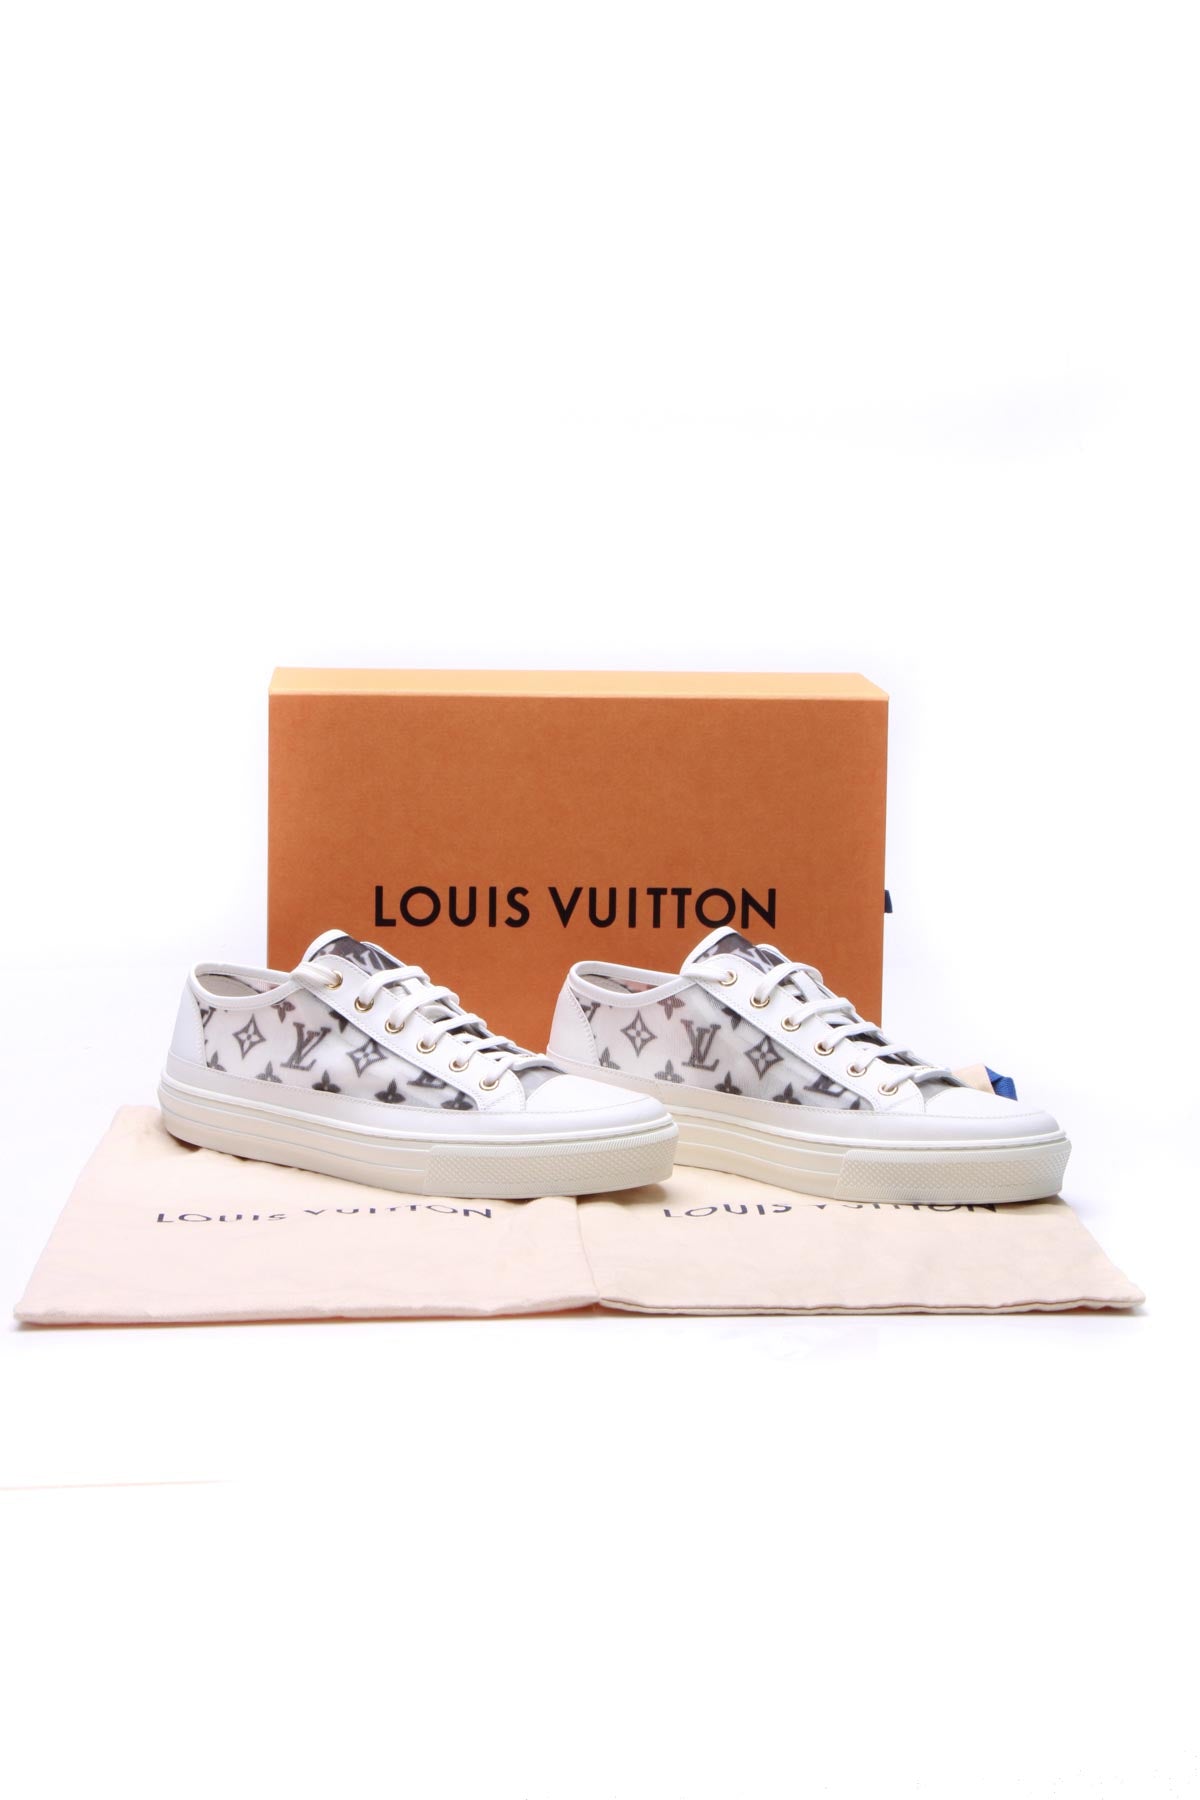 Women’s hi-top Louis Vuitton Stellar sneaker boot size 38 1/2